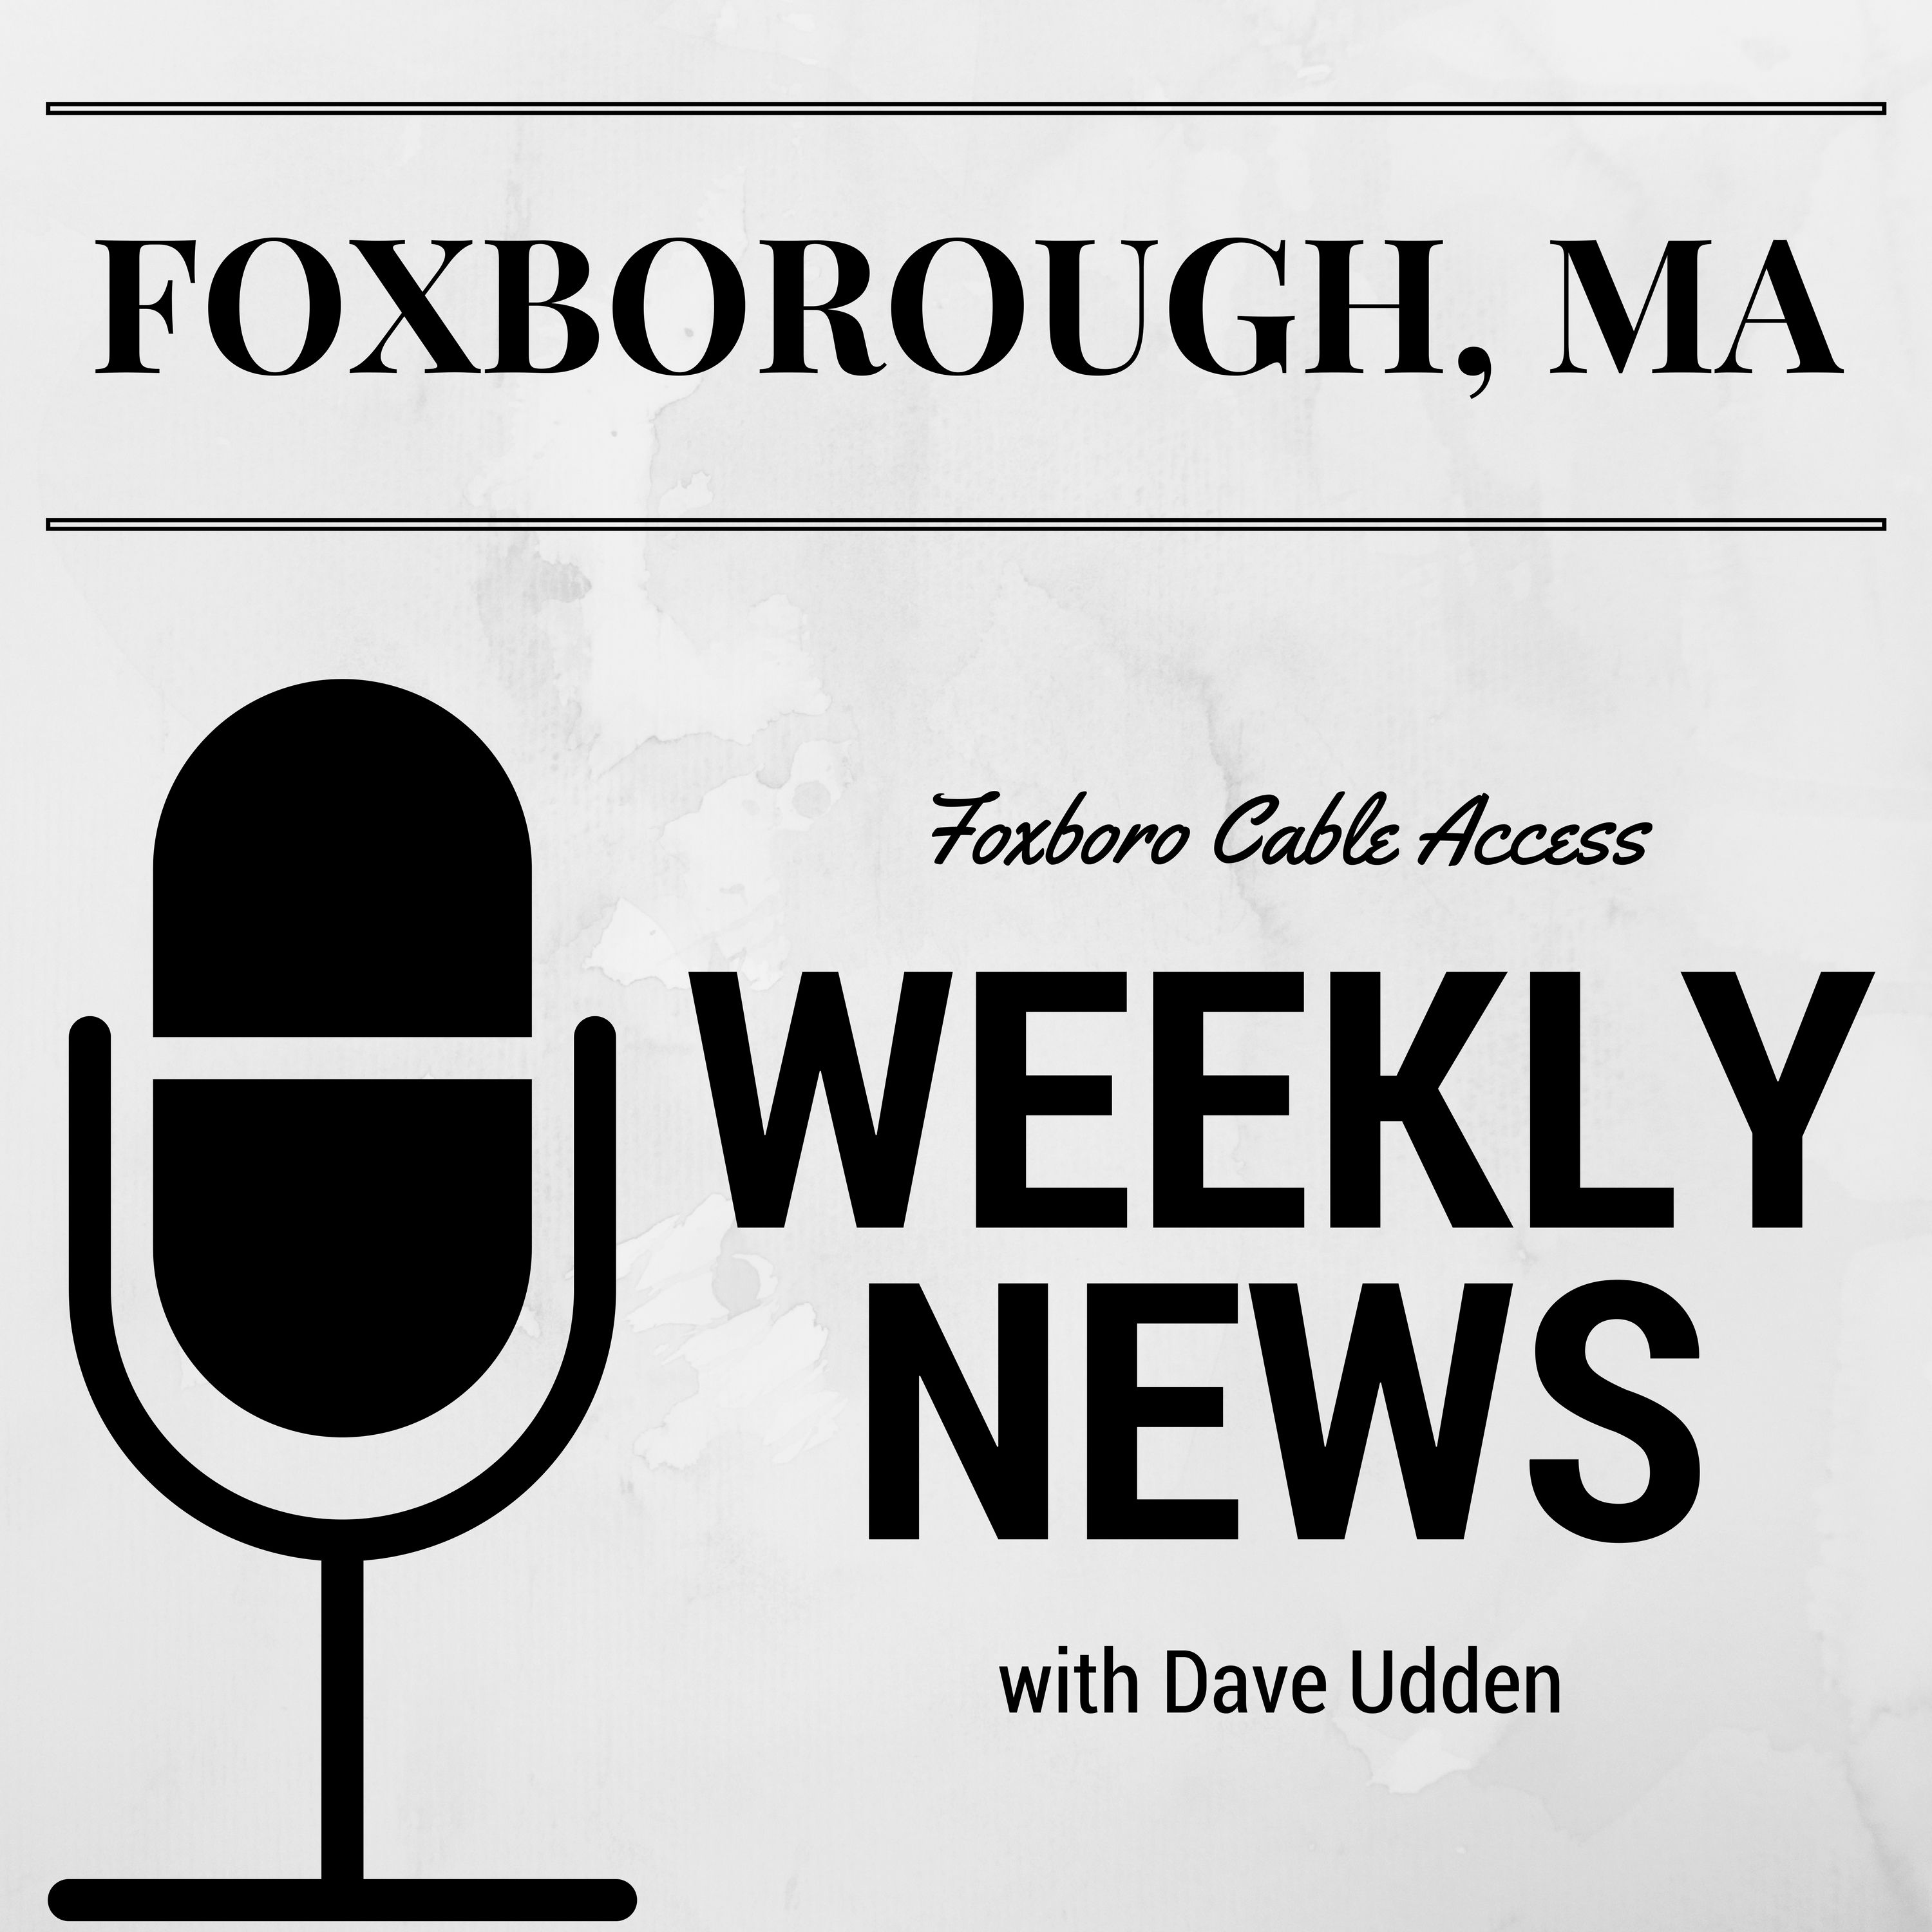 Foxborough News